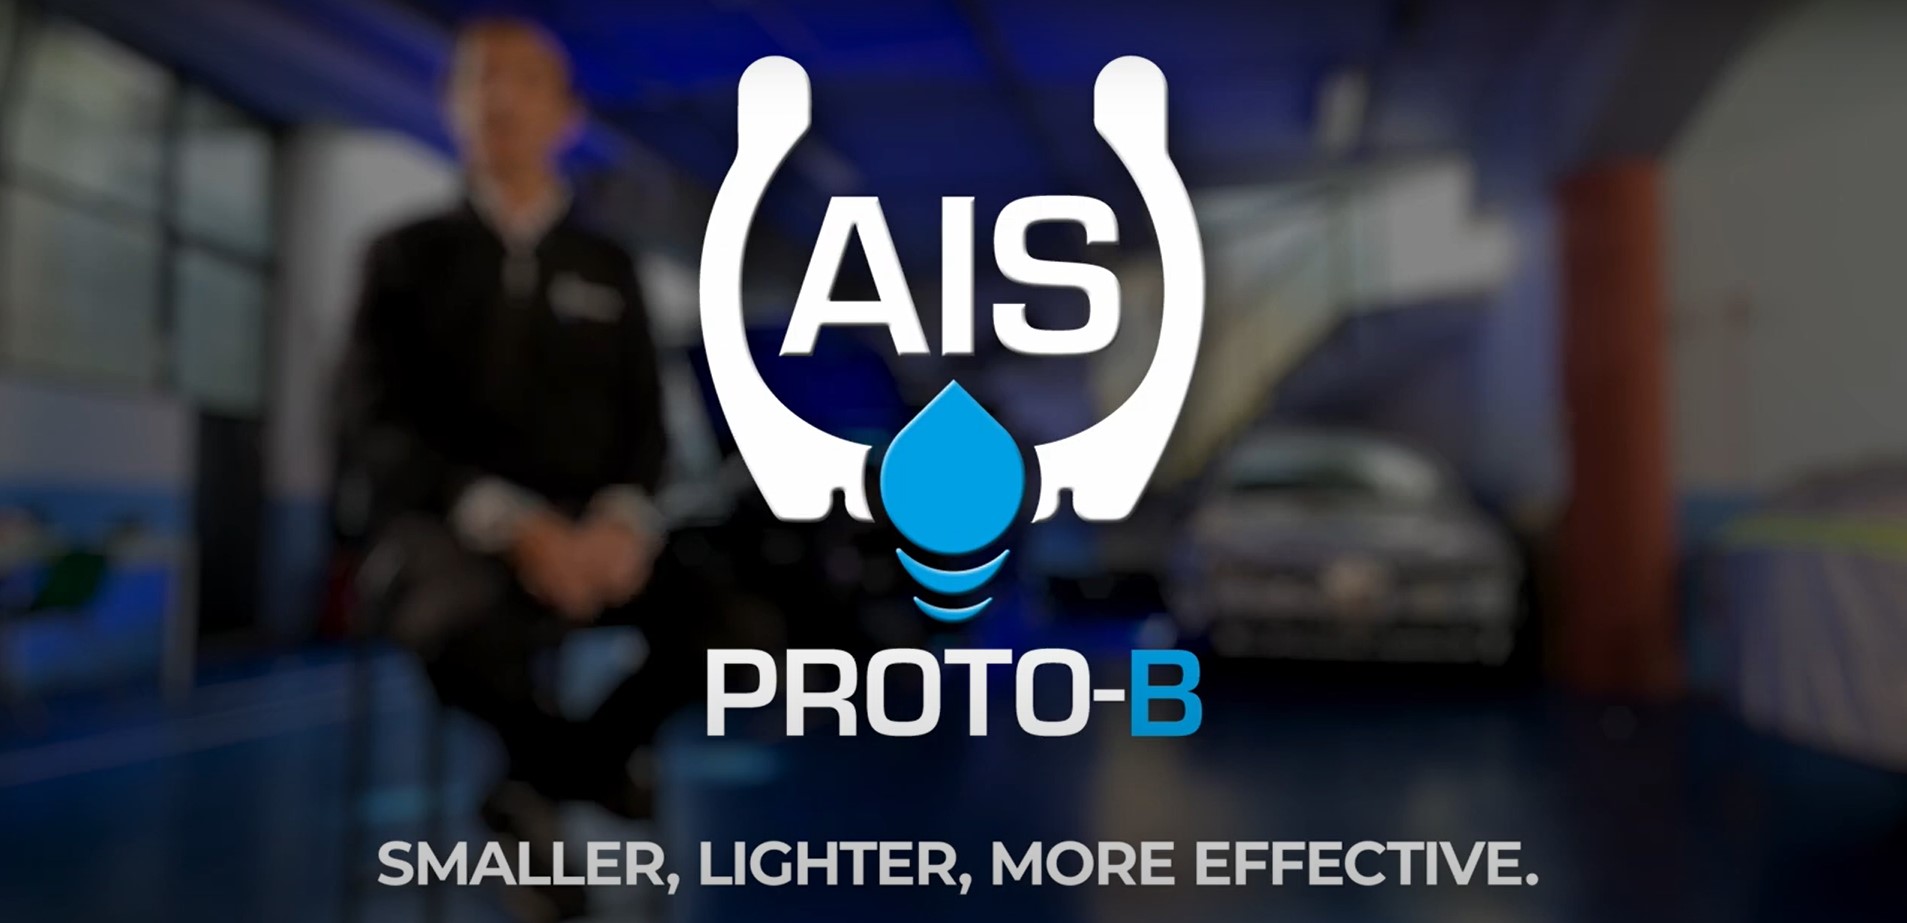 Sneak peek of new AIS Proto-B anti-aquaplaning system